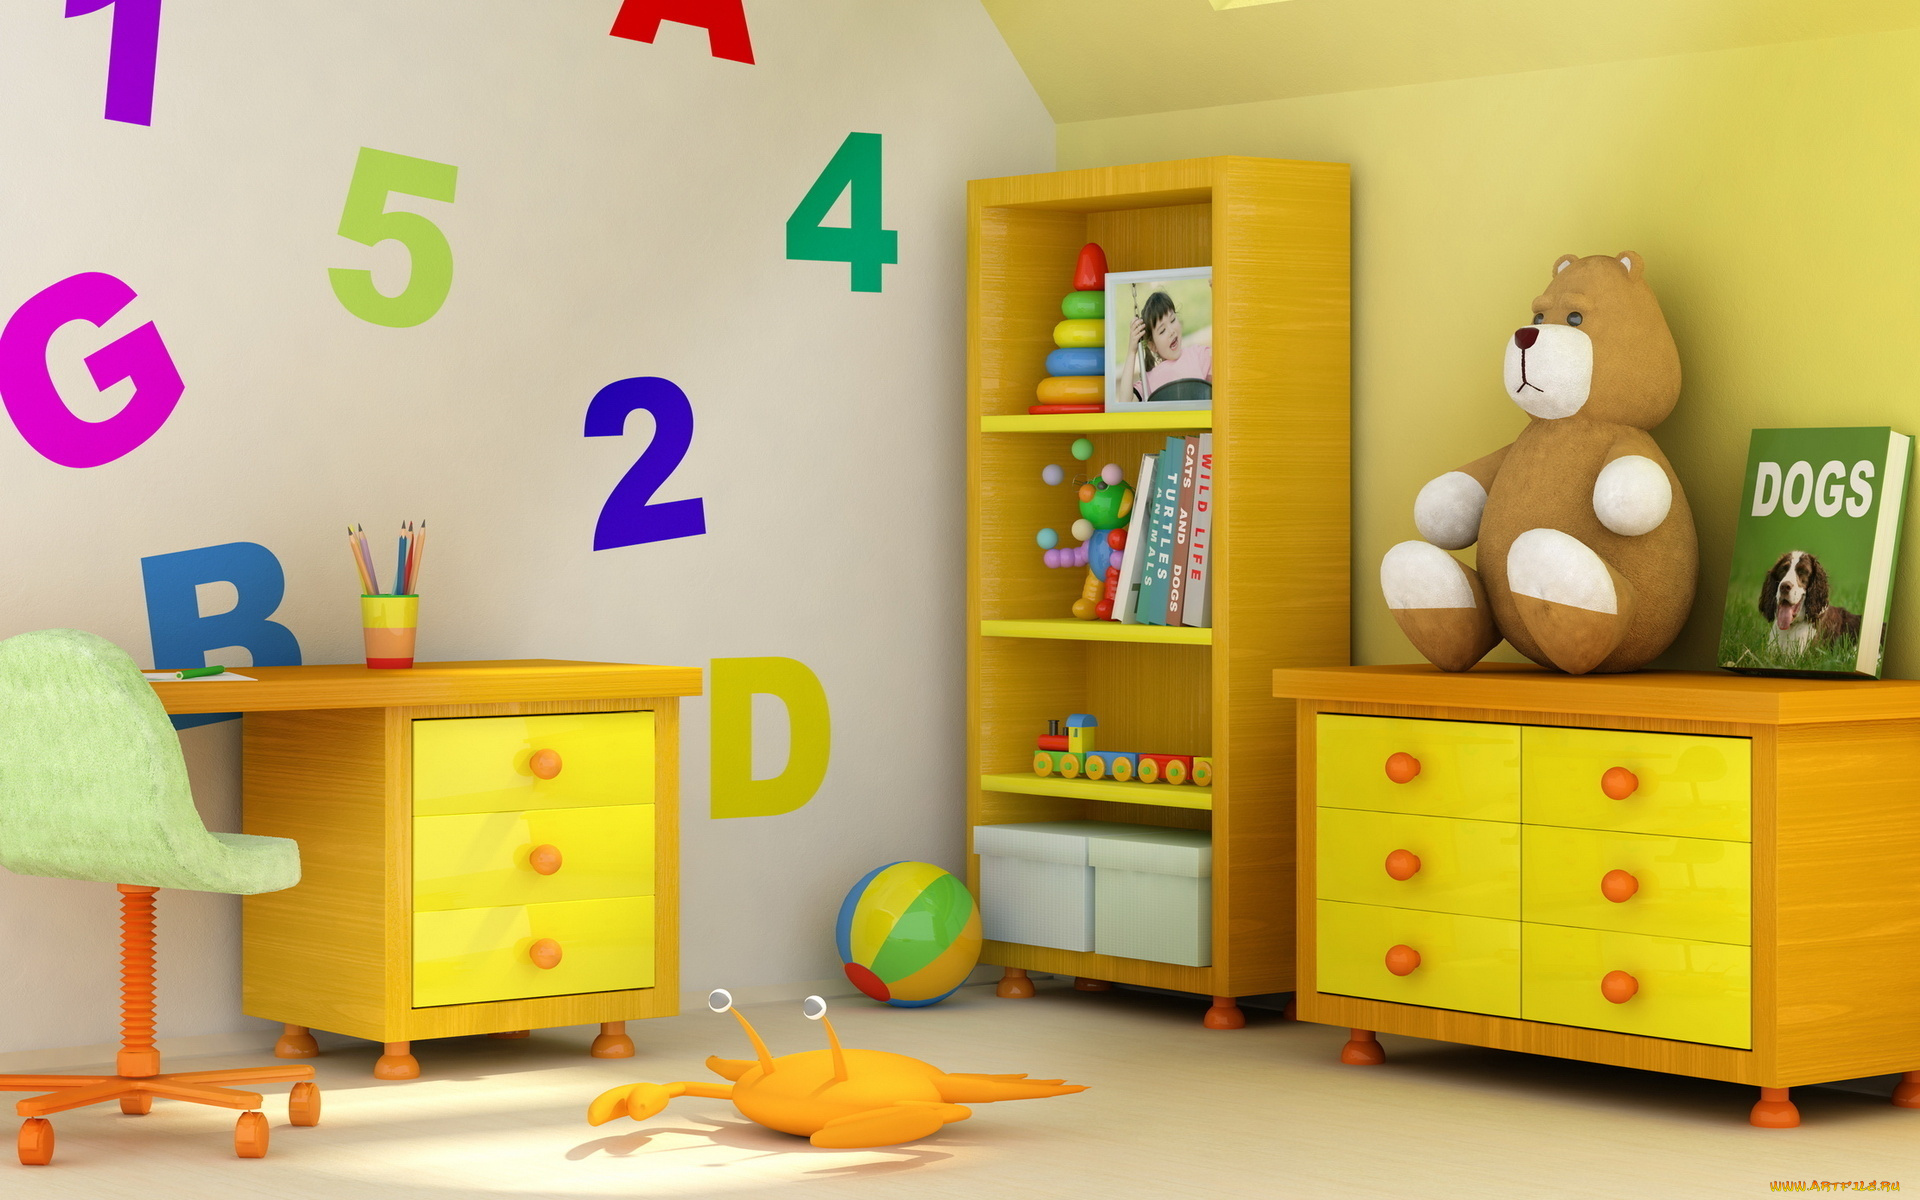 интерьер, детская, комната, игрушки, стул, карандаши, мяч, дизайн, цифры, книги, мишка